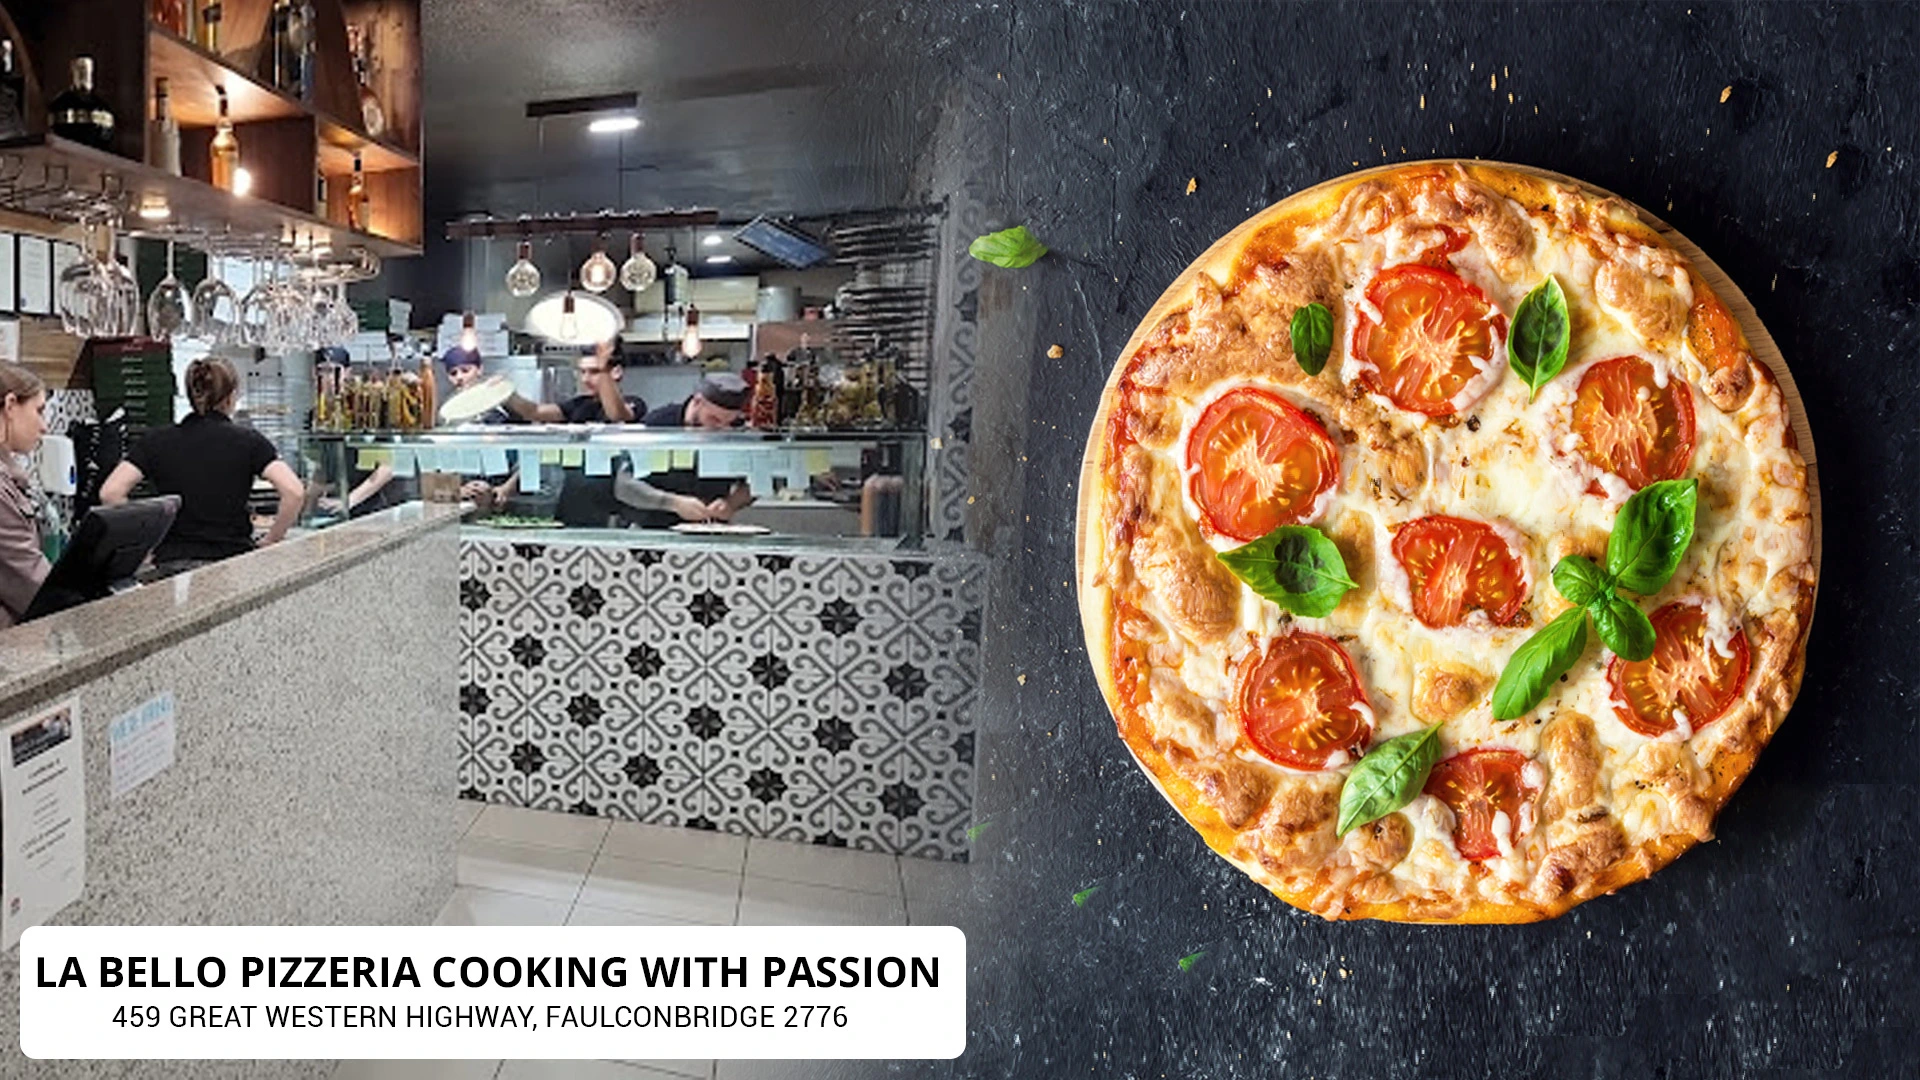 La Bello Pizzeria Cooking with Passion